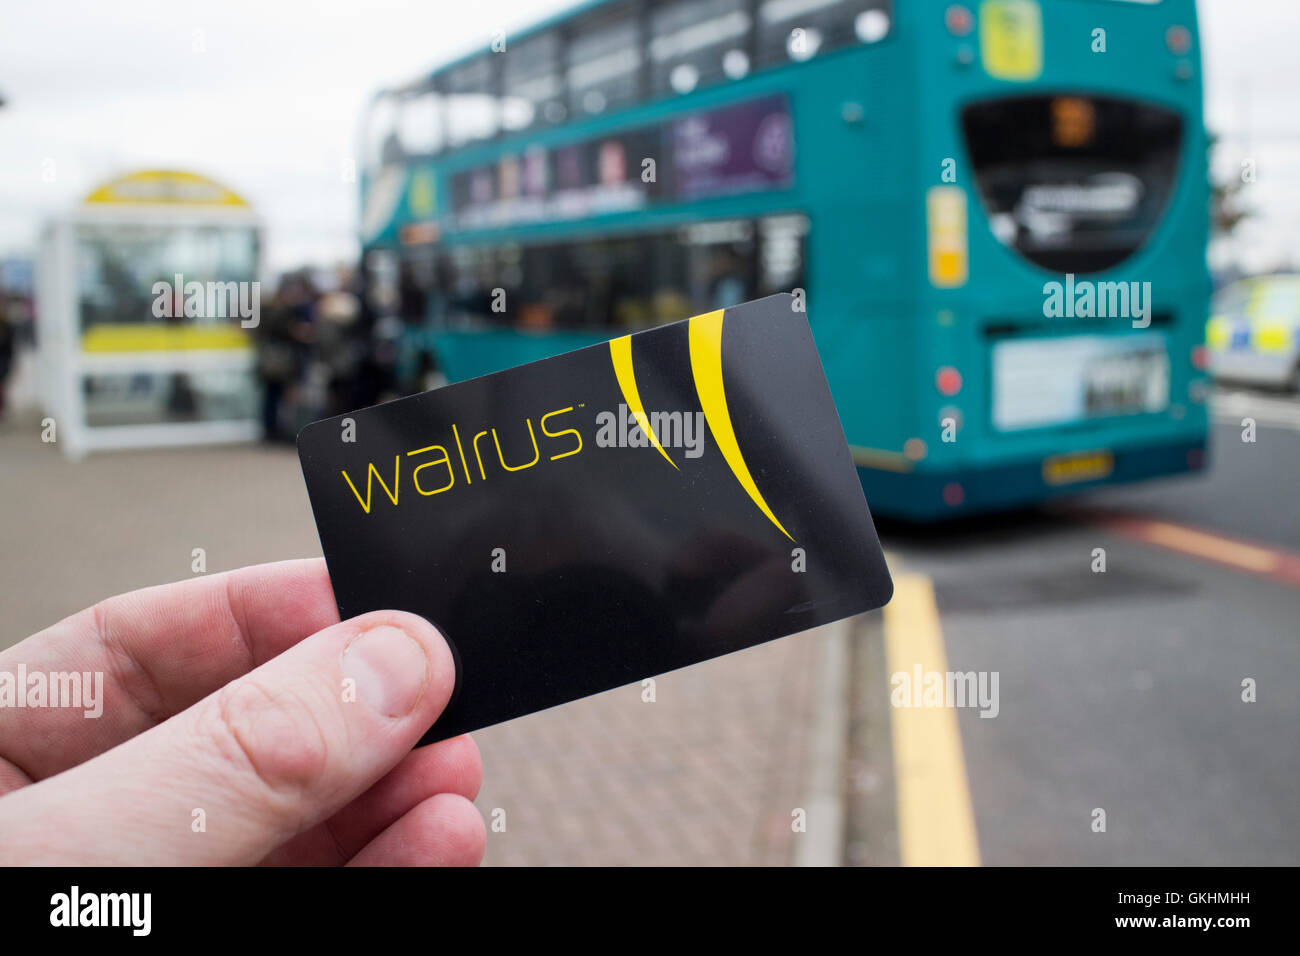 merseytravel walrus card travel smartcard at bus stop Stock Photo